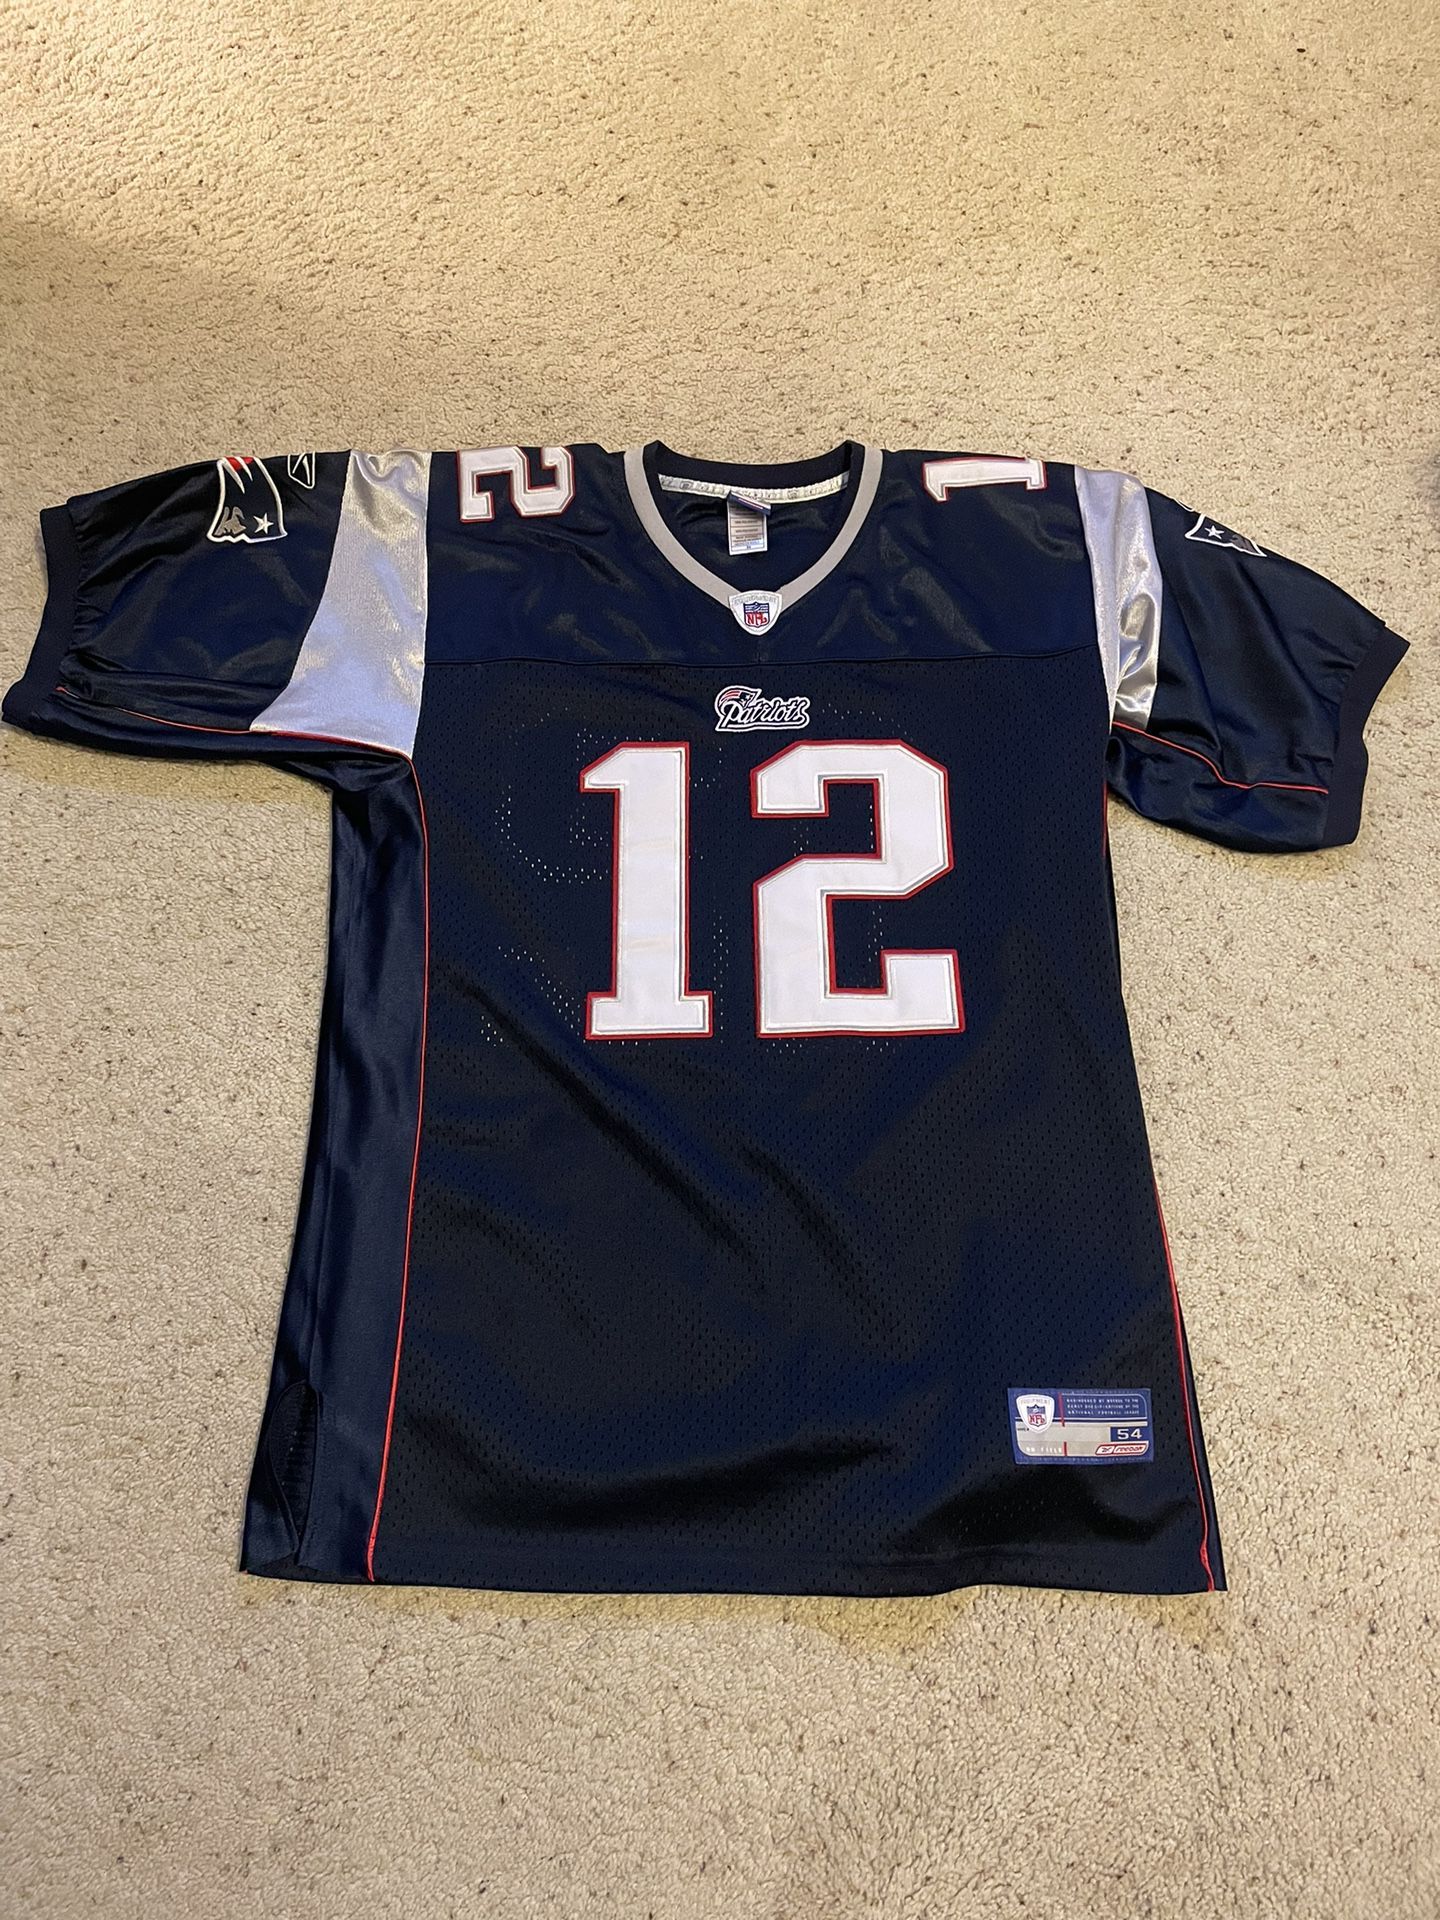 Tom Brady Patriots Jersey (stitched)